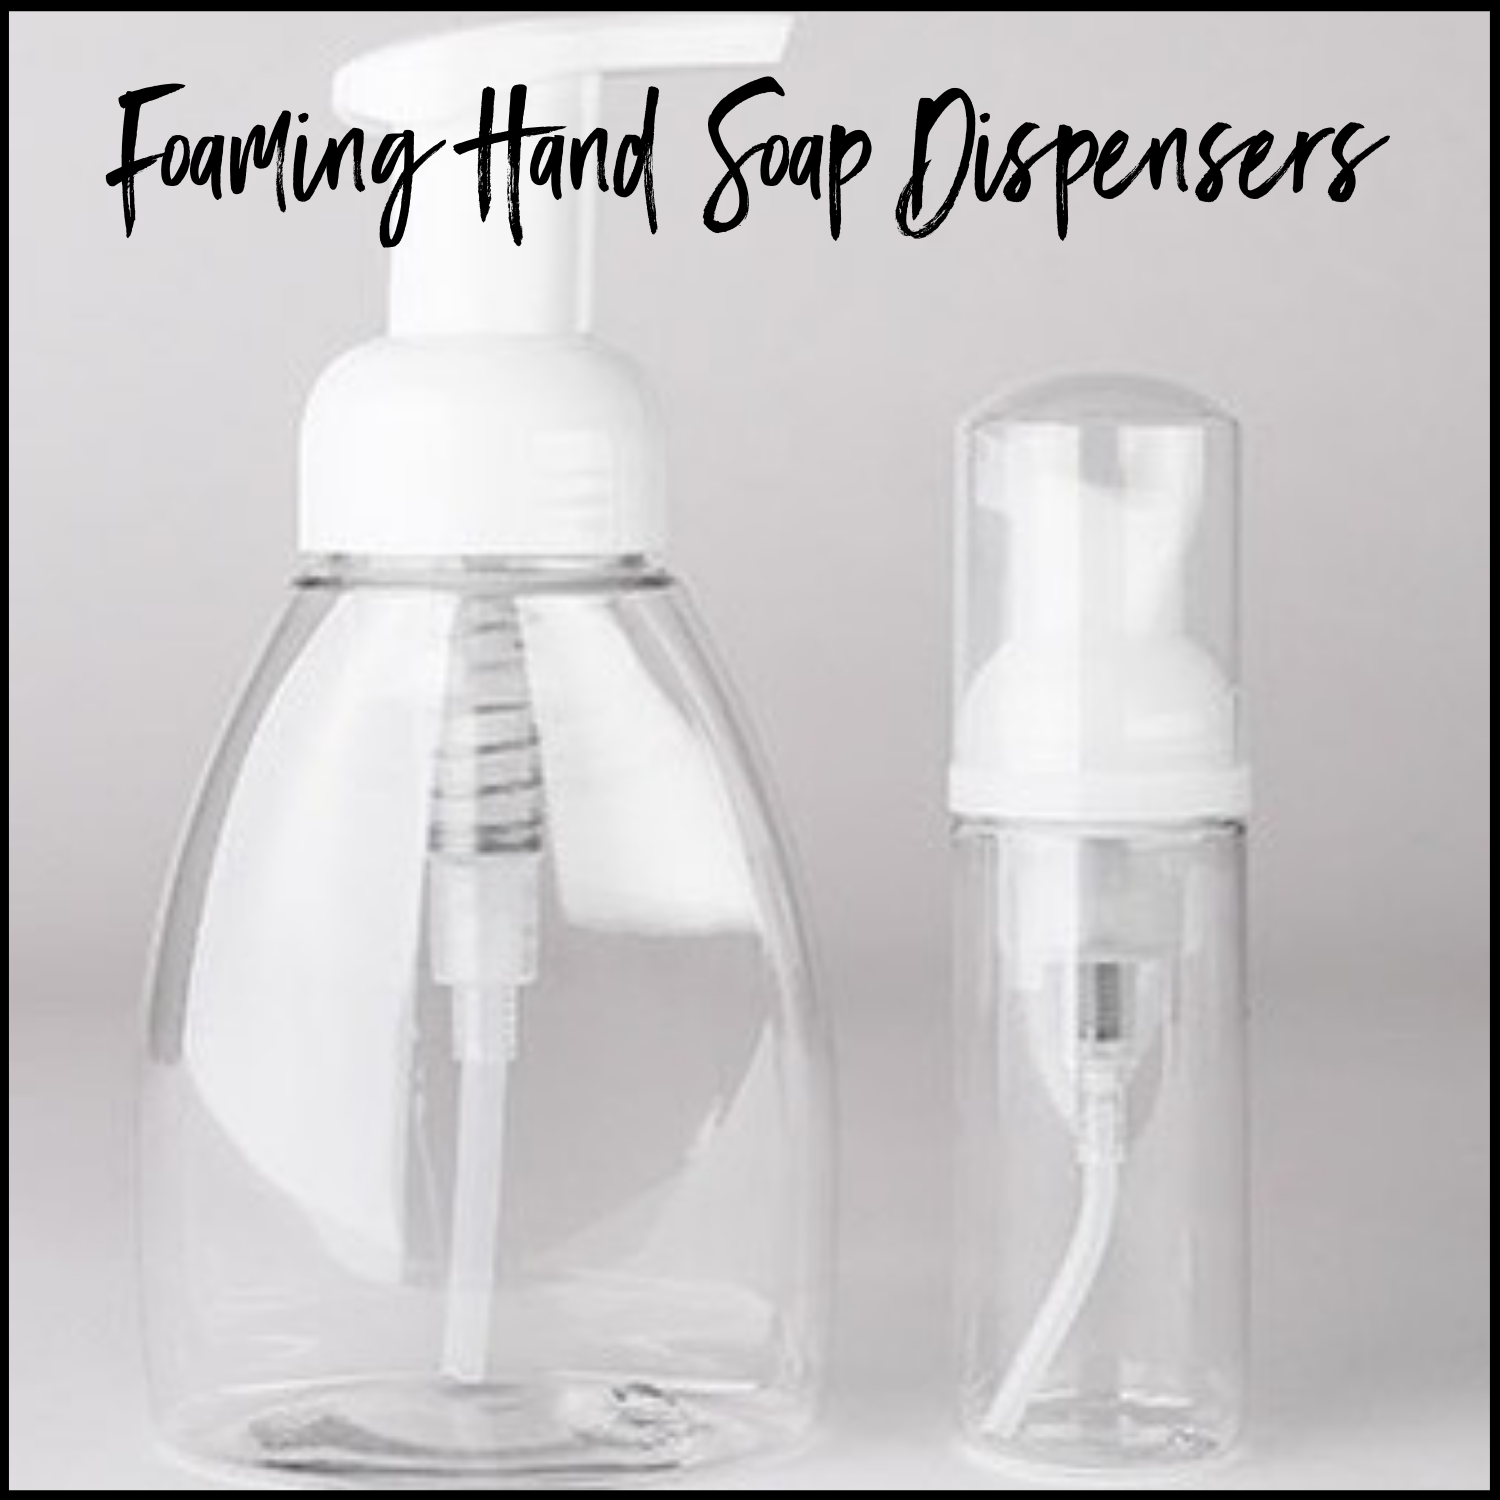 Foaming Hand Soap Dispensers